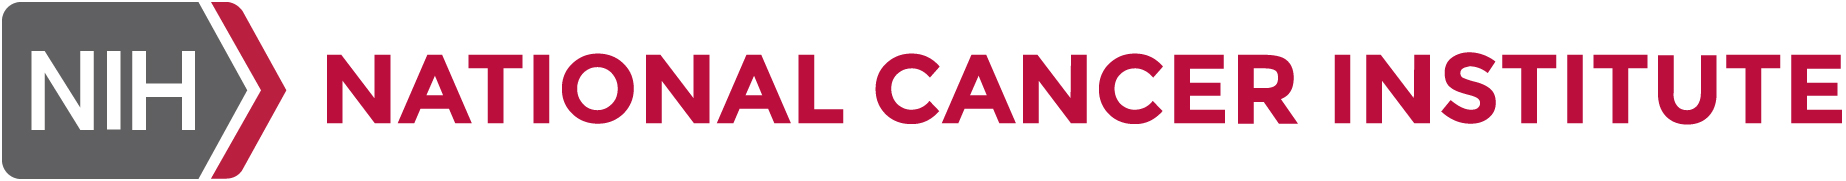 NCI-logo